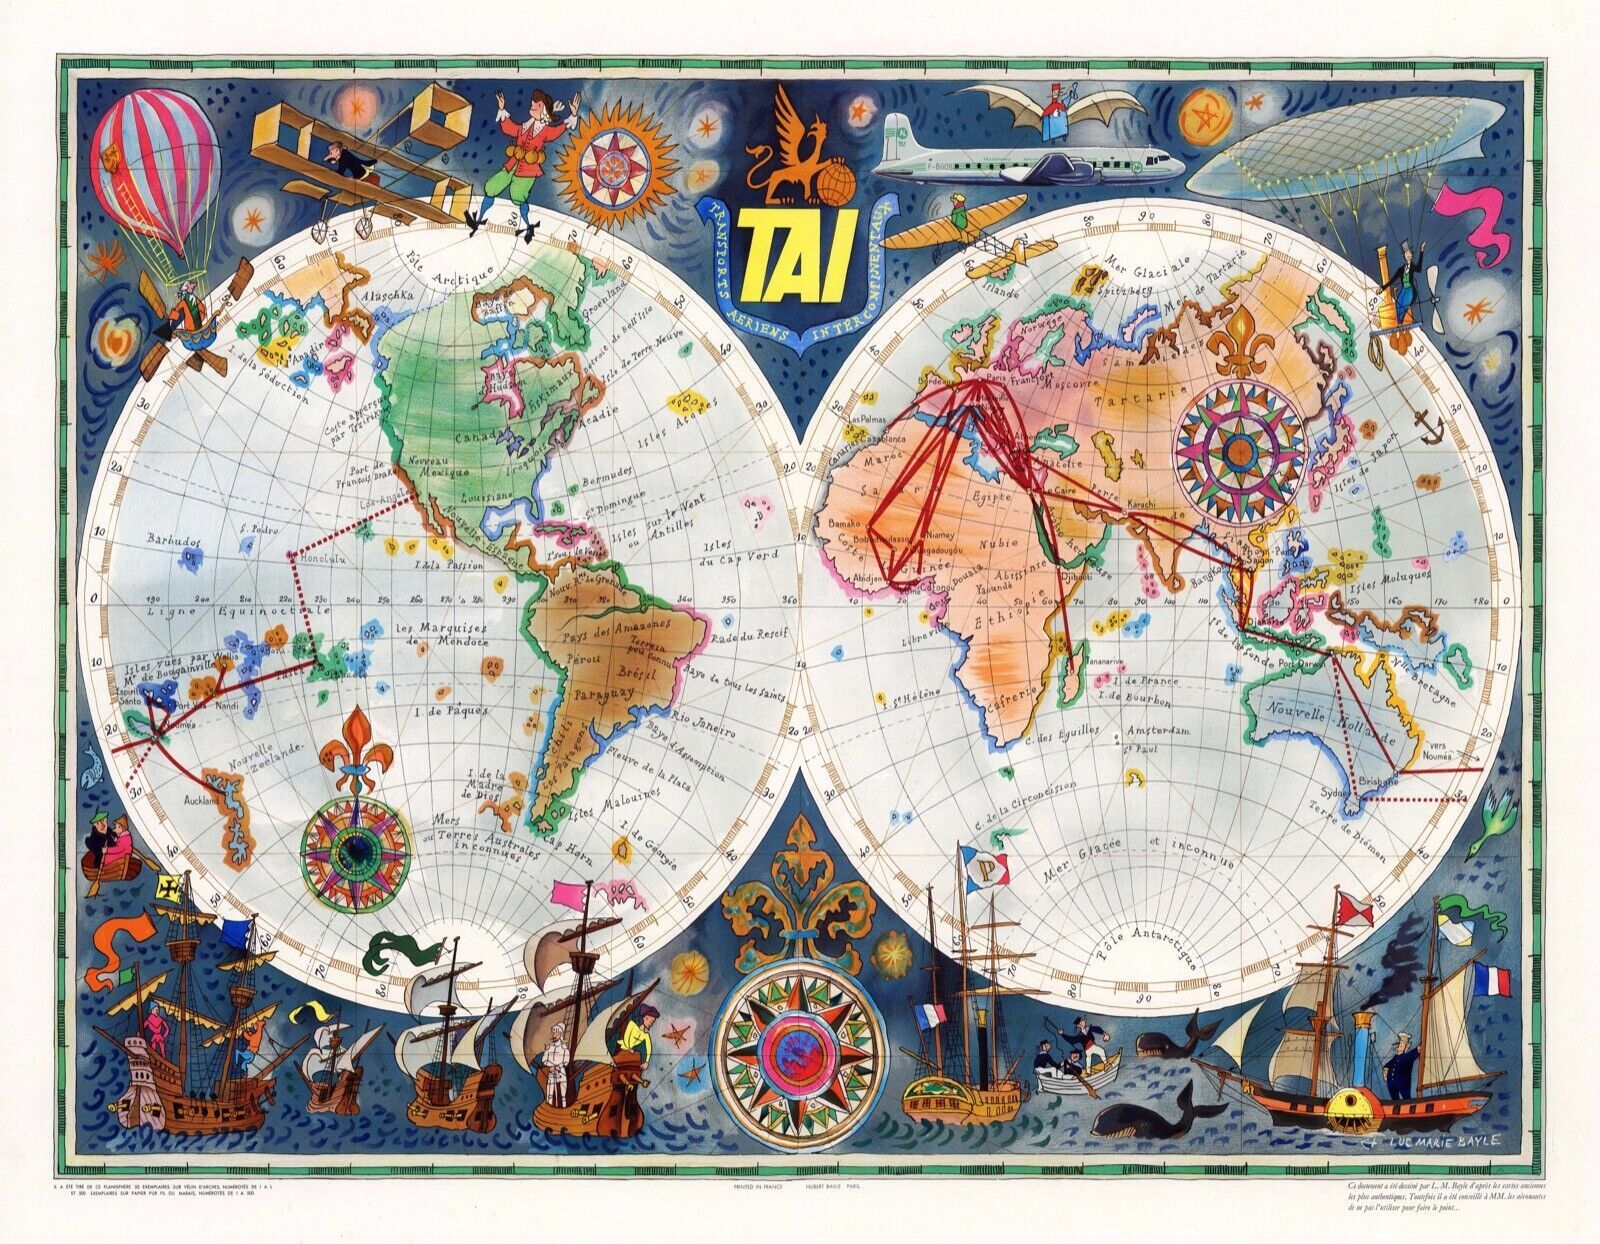 12944.Decoration Poster.Wall art.Home vintage interior design.World map travel - $17.10 - $54.00